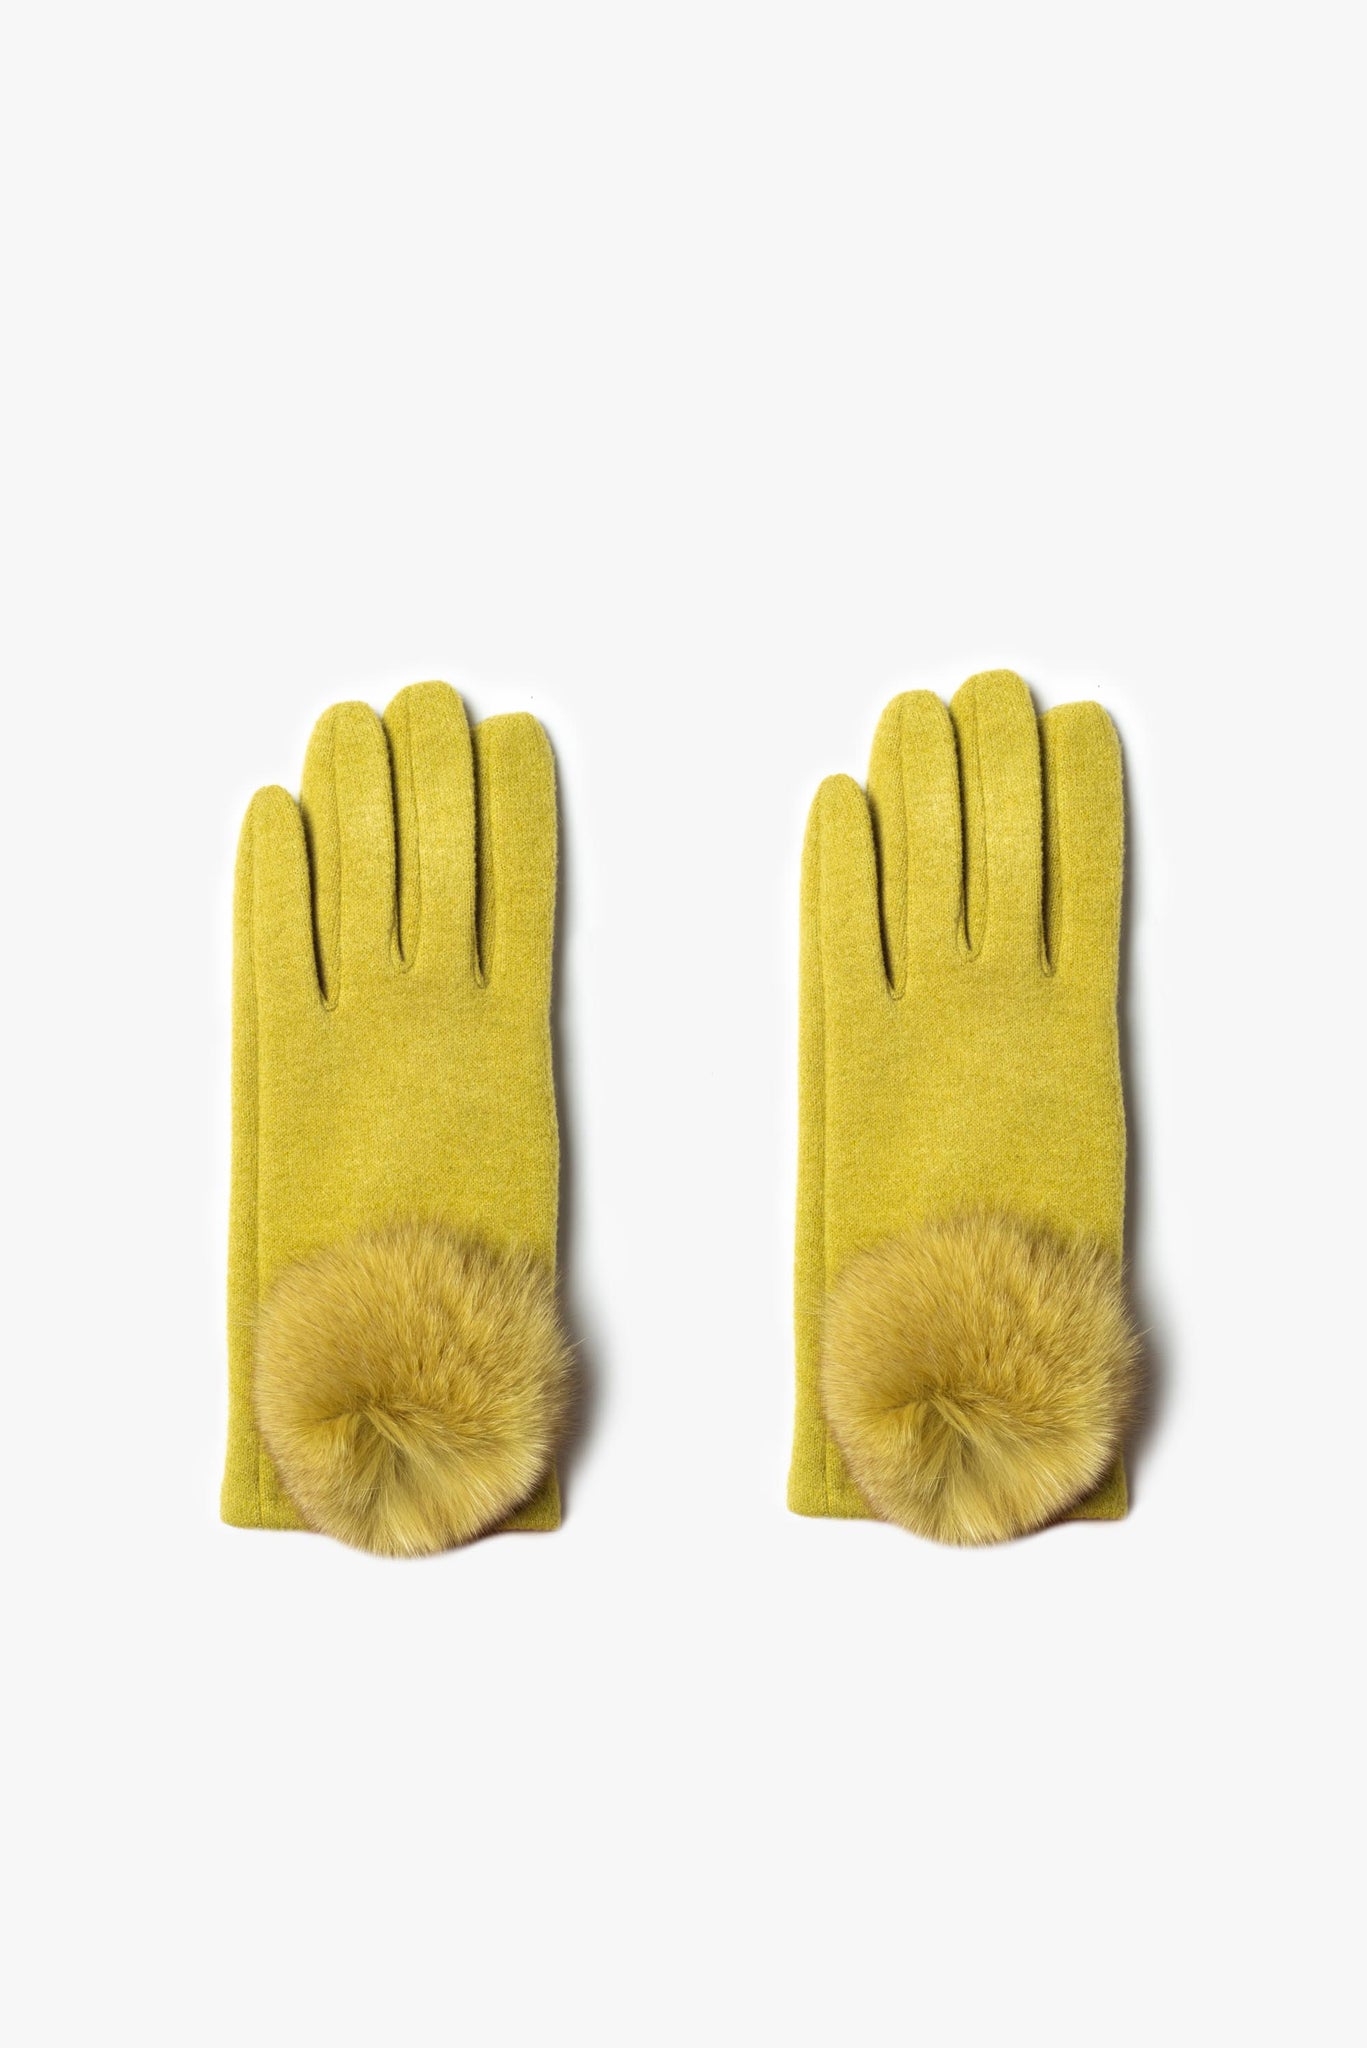 Suede gloves with pom pom detail